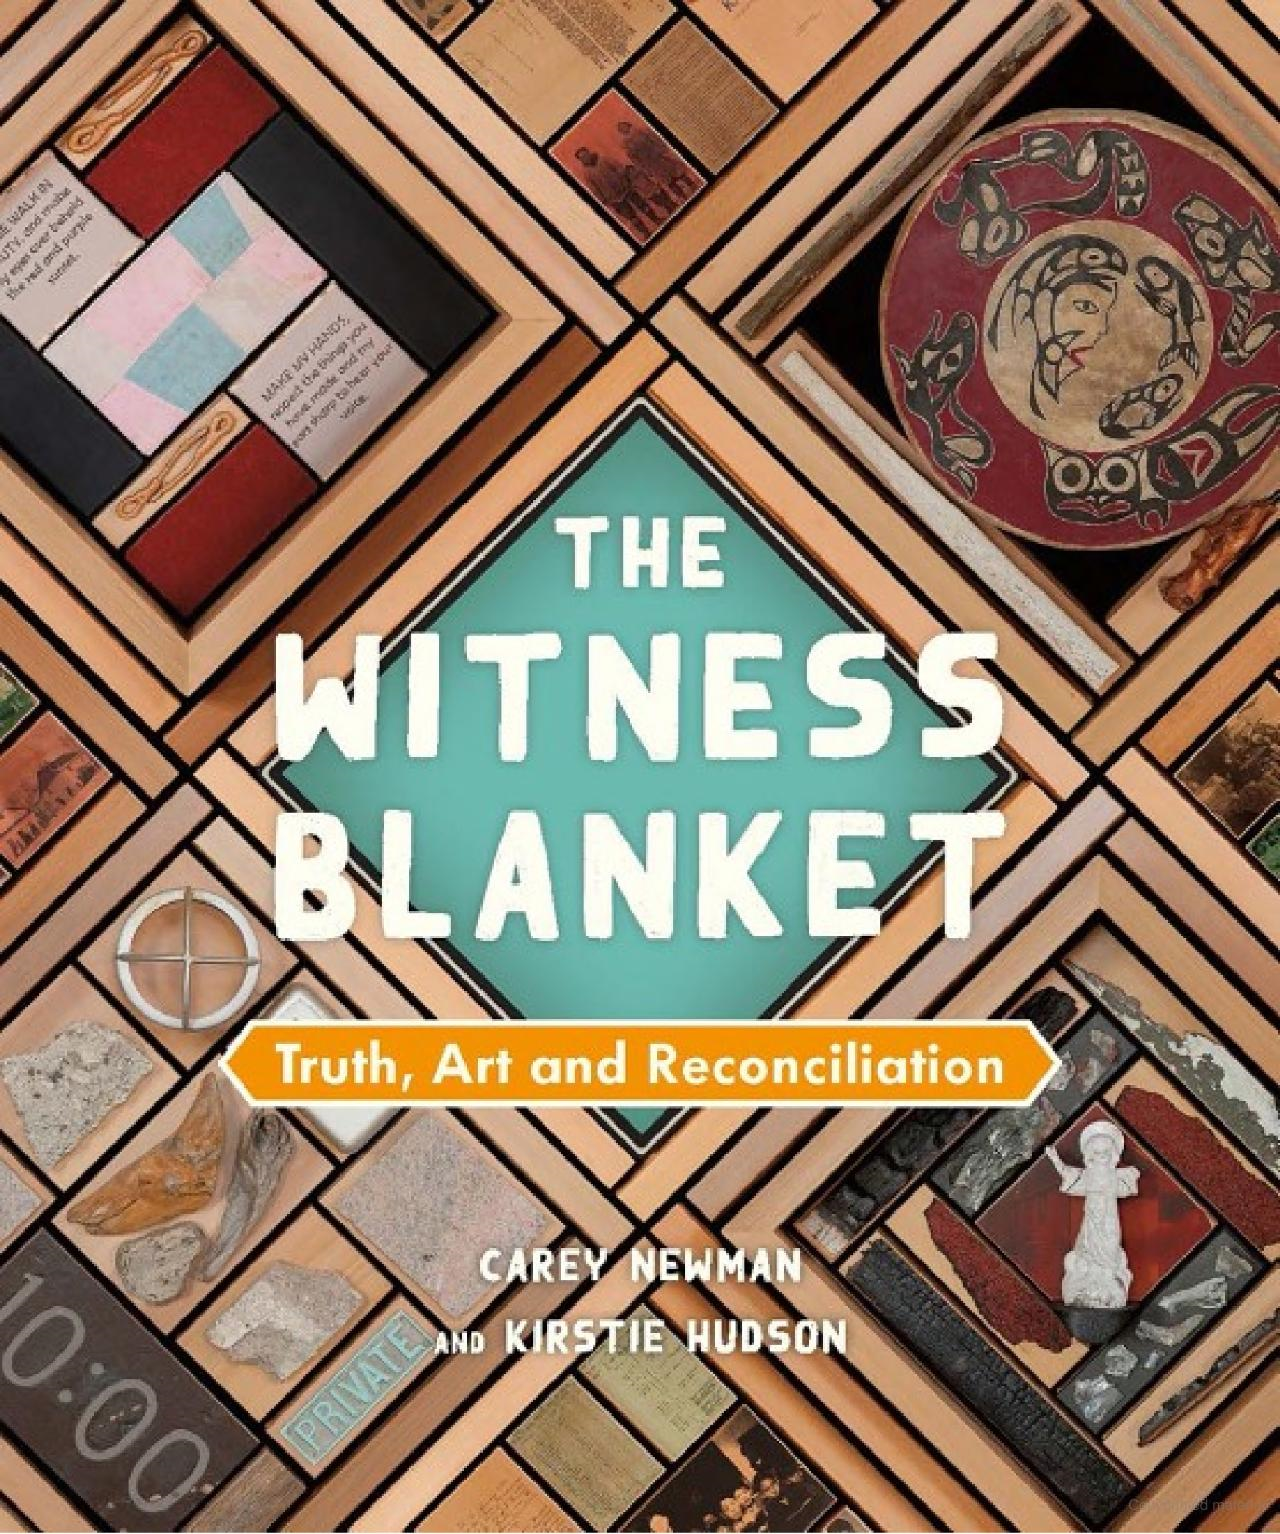 The Witness Blanket